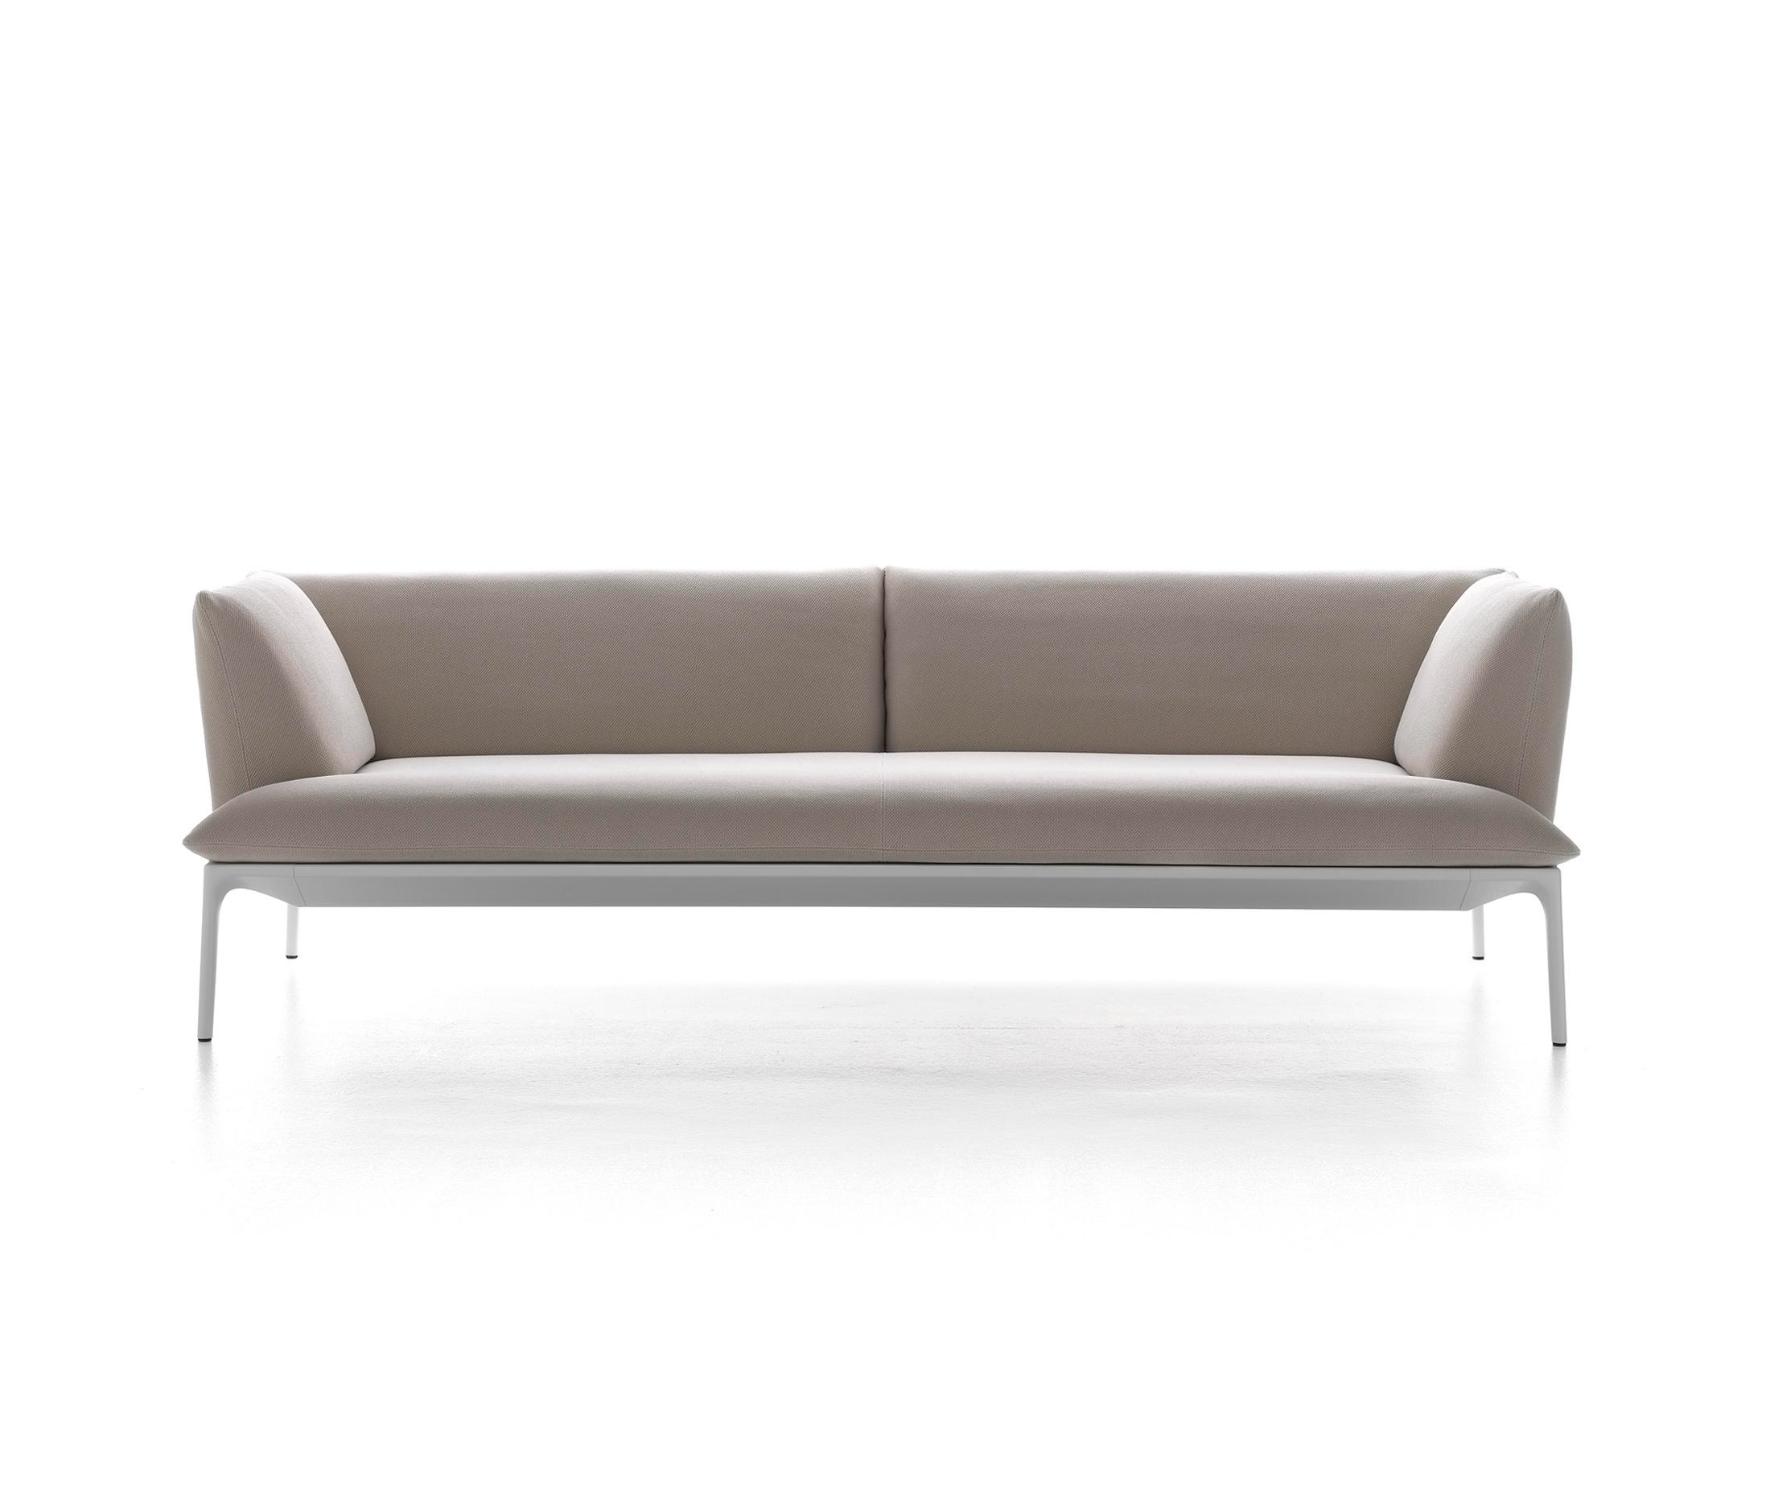 Yale Sofa ☞ Dimensions: Length 220 cm